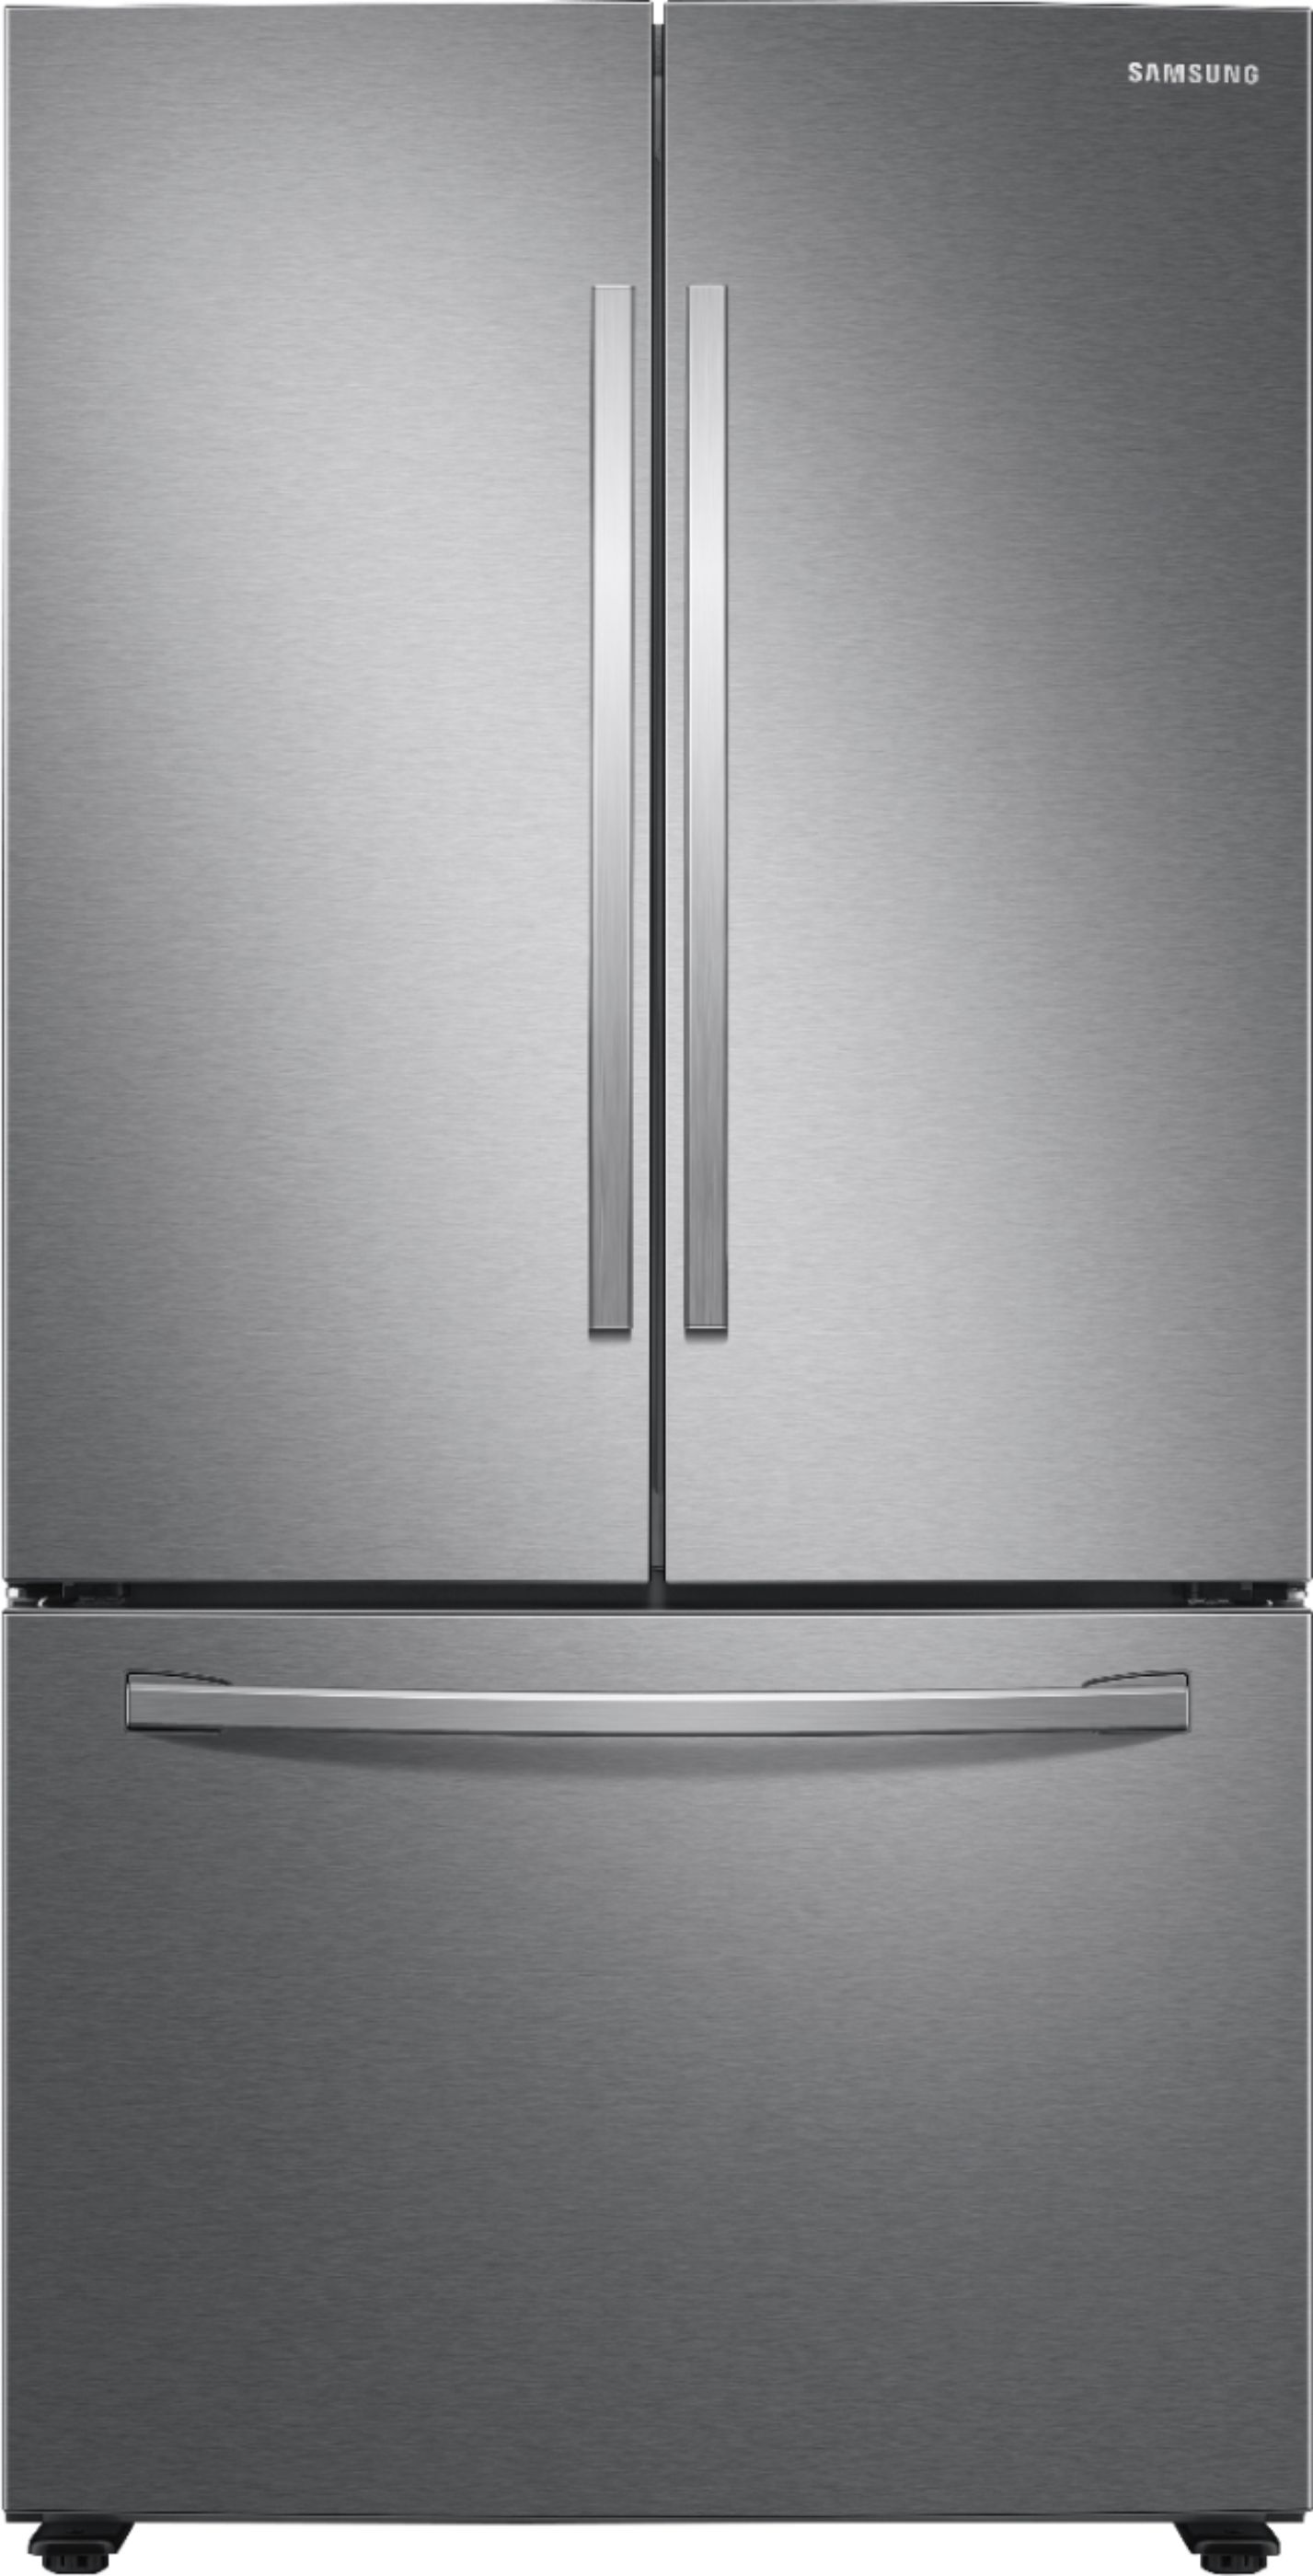 Samsung - 28 cu. ft. Large Capacity 3-Door French Door Refrigerator with Internal Water Dispenser - Stainless steel